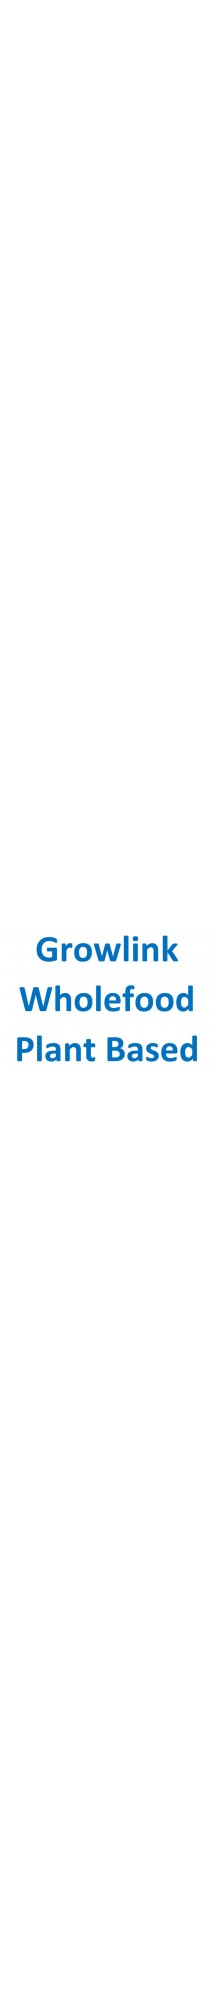 Growlink Wholefood Plant Based